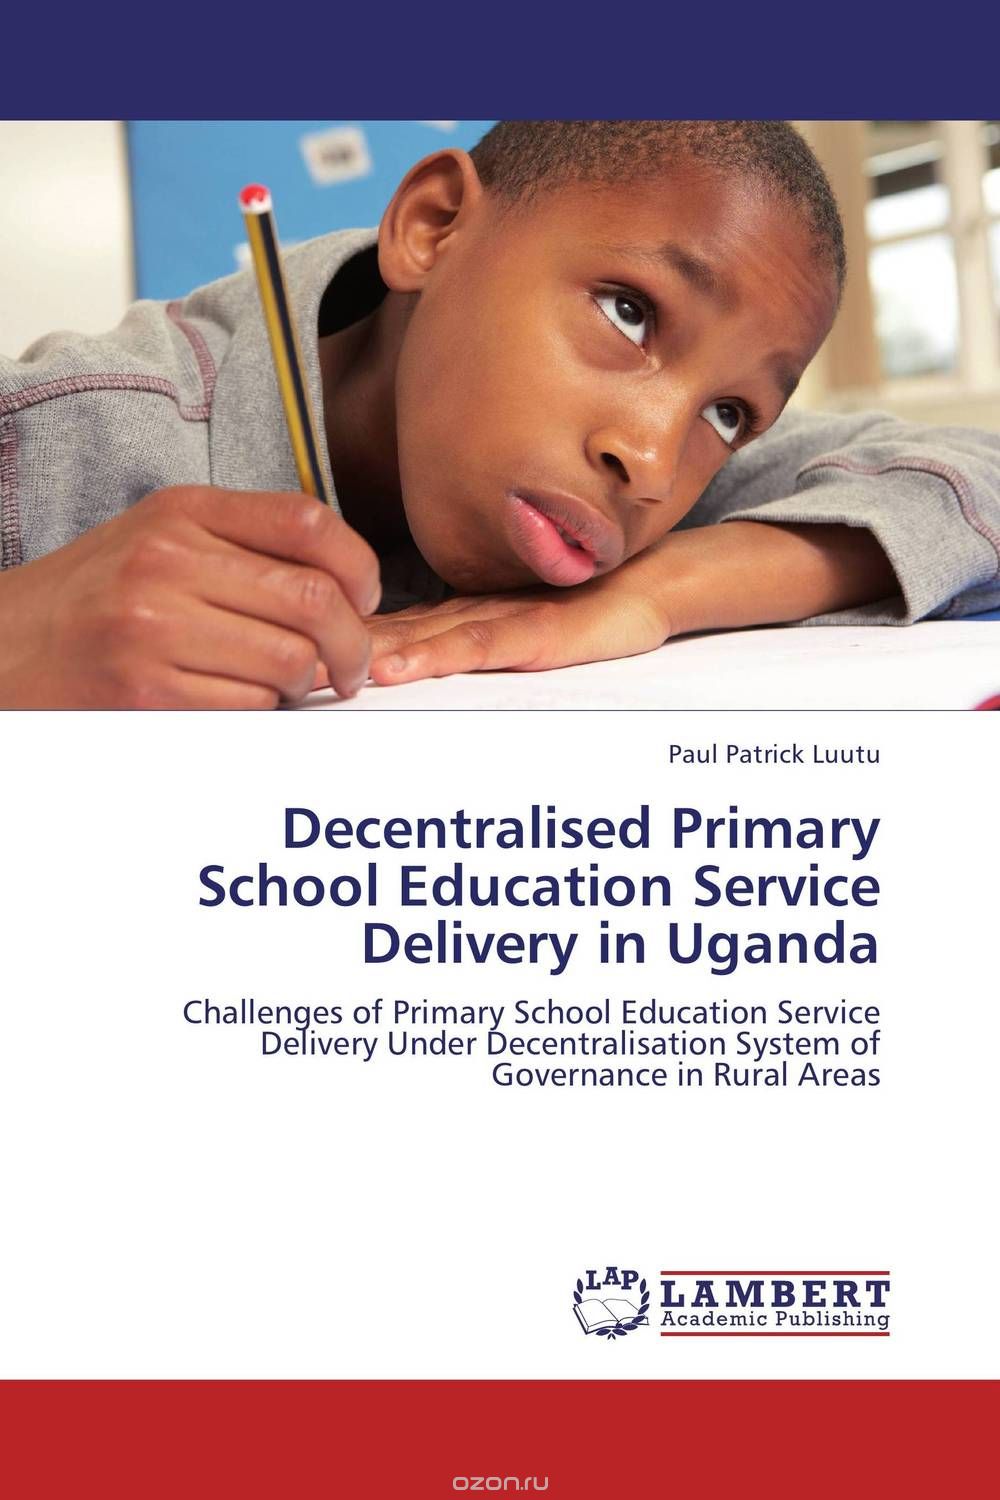 Скачать книгу "Decentralised Primary School Education Service Delivery in Uganda"